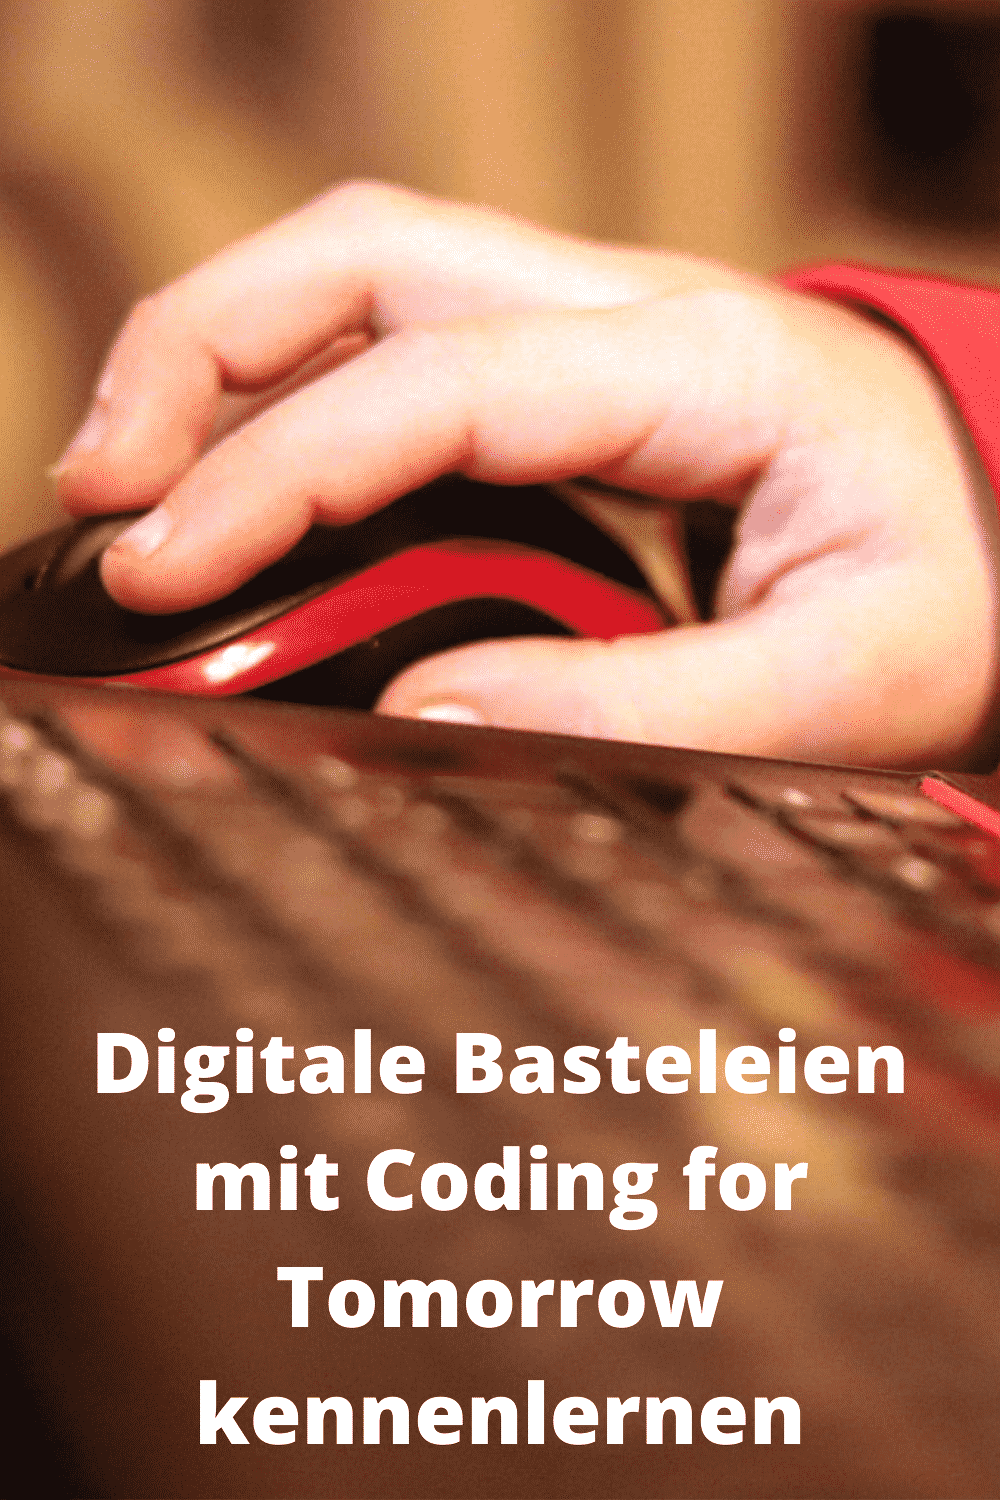 Digitale Basteleien mit Coding for Tomorrow kennenlernen